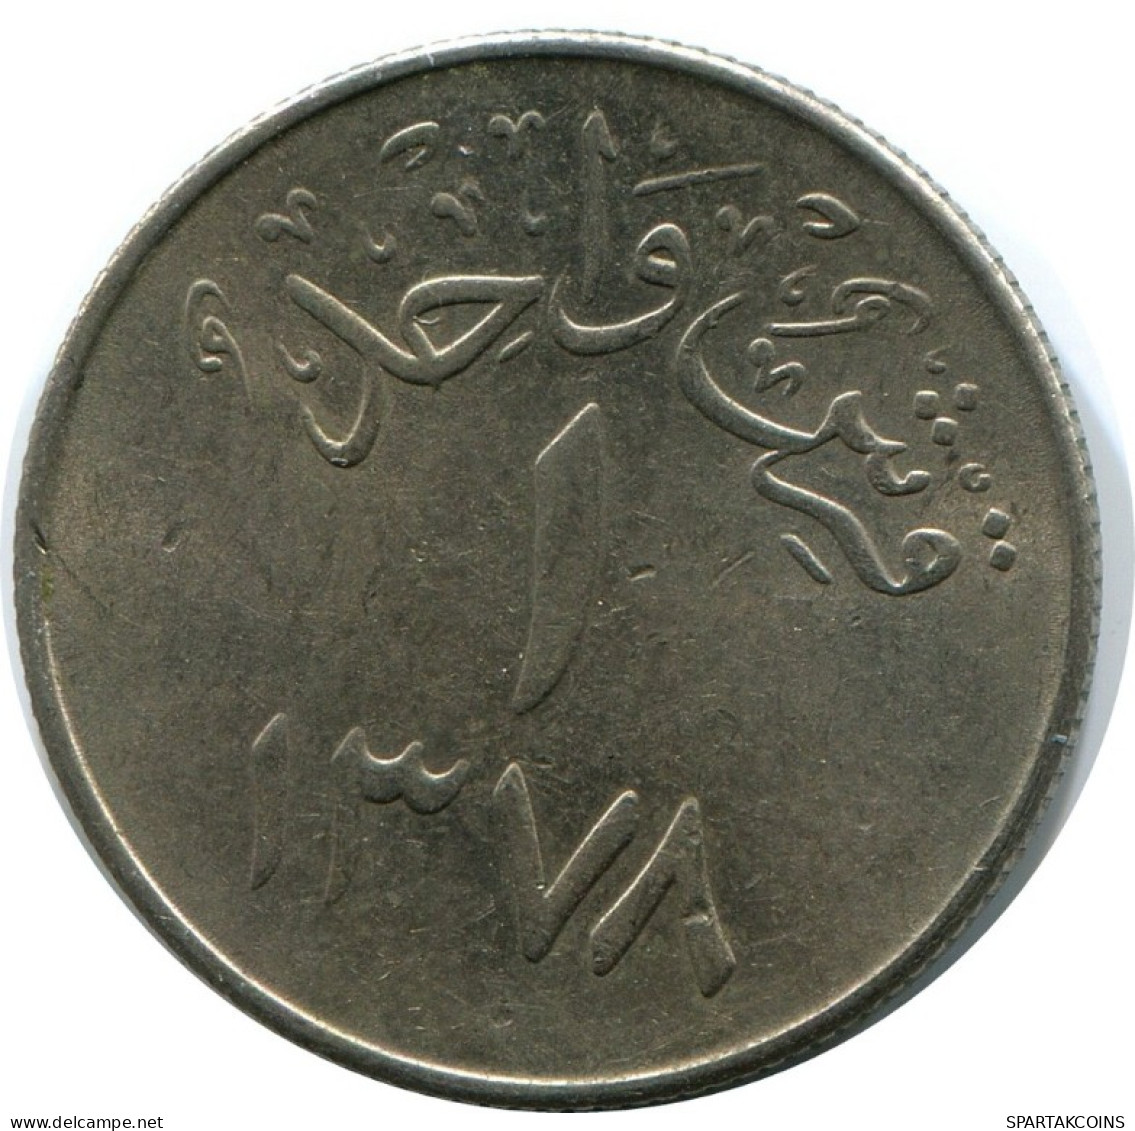 1 GHIRSH 1958 ARABIA SAUDITA SAUDI ARABIA Islámico Moneda #AK105.E.A - Saoedi-Arabië